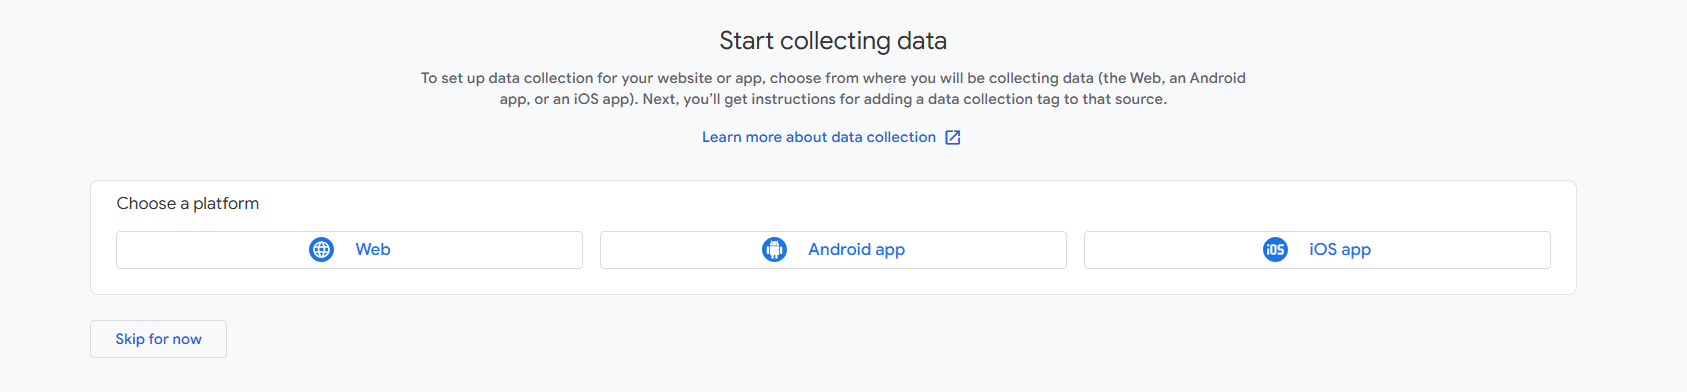 Start collecting data